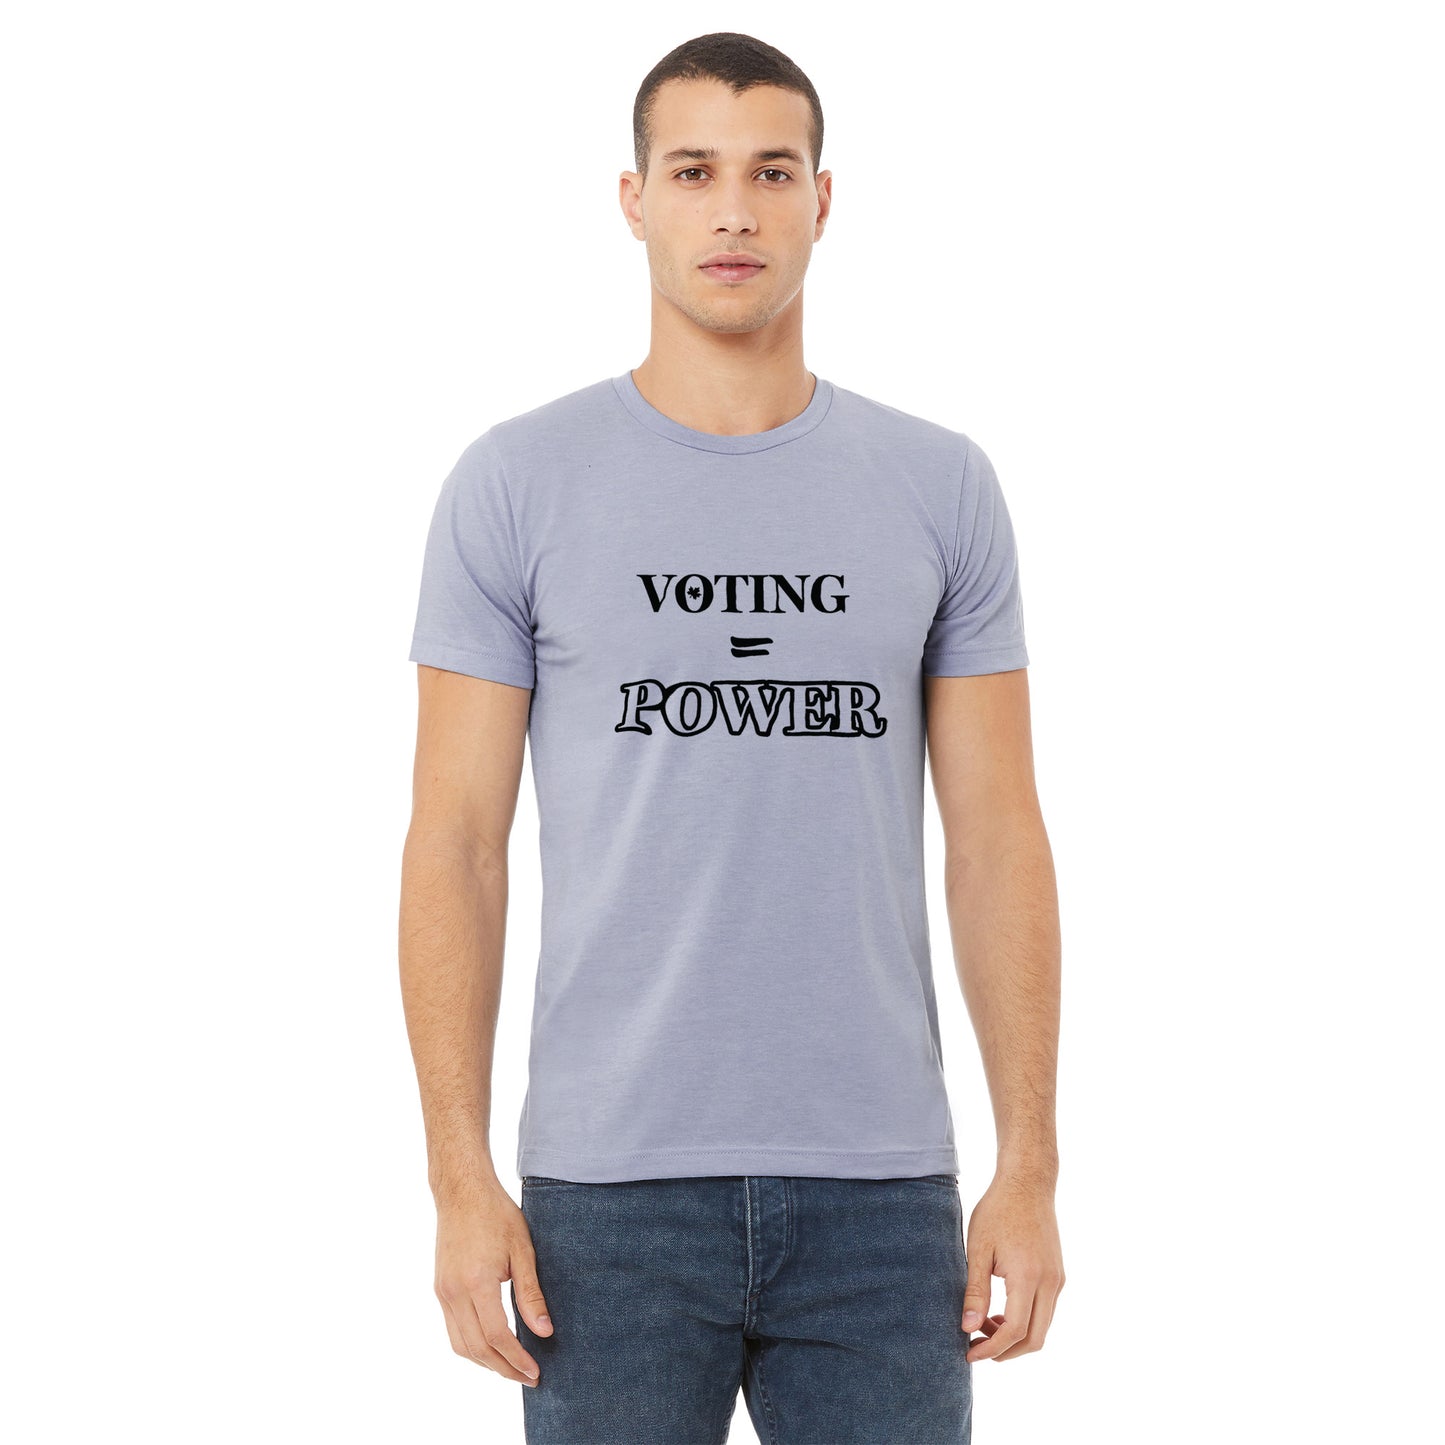 Voting = Power - Unisex T-Shirt